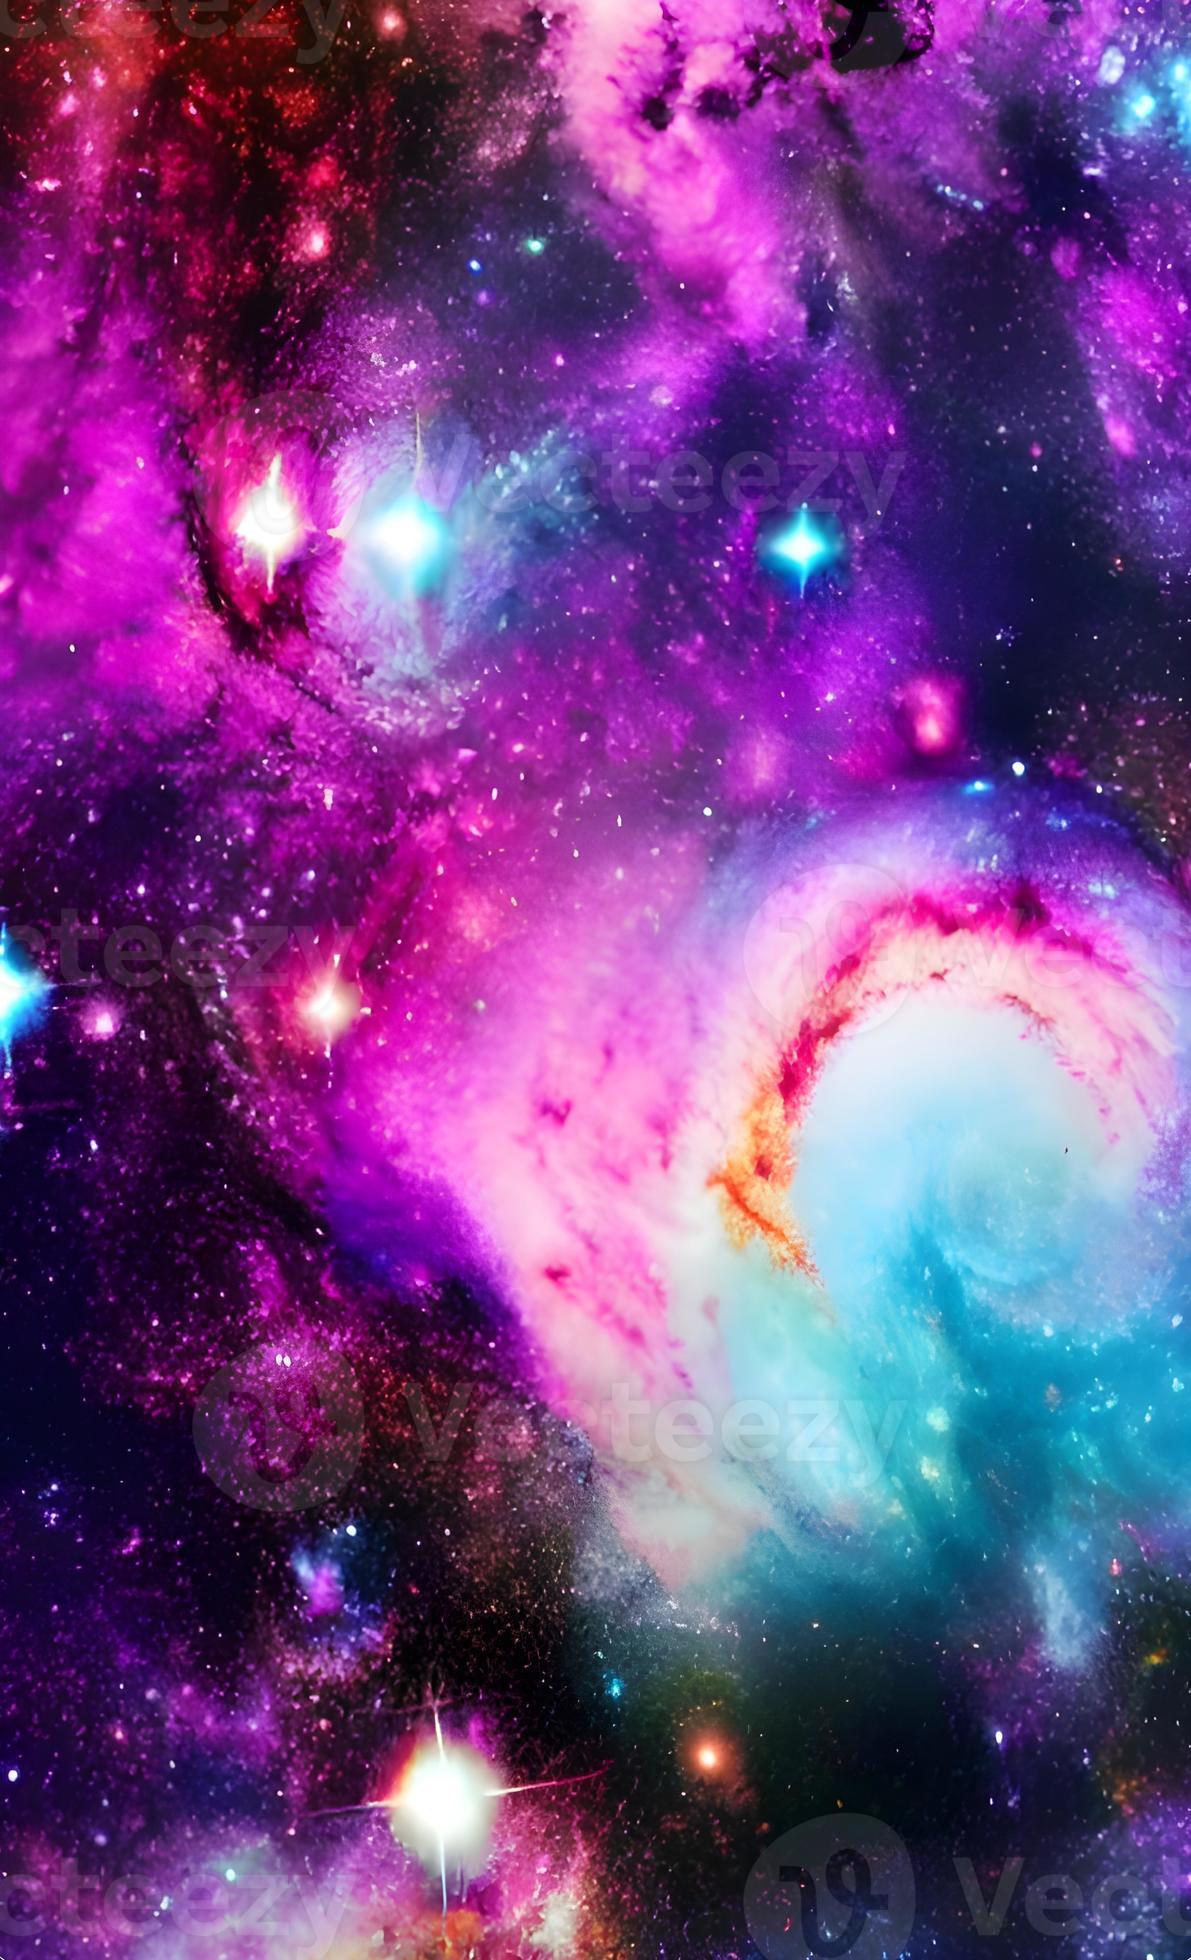 A galaxy with stars and nebulae - Galaxy